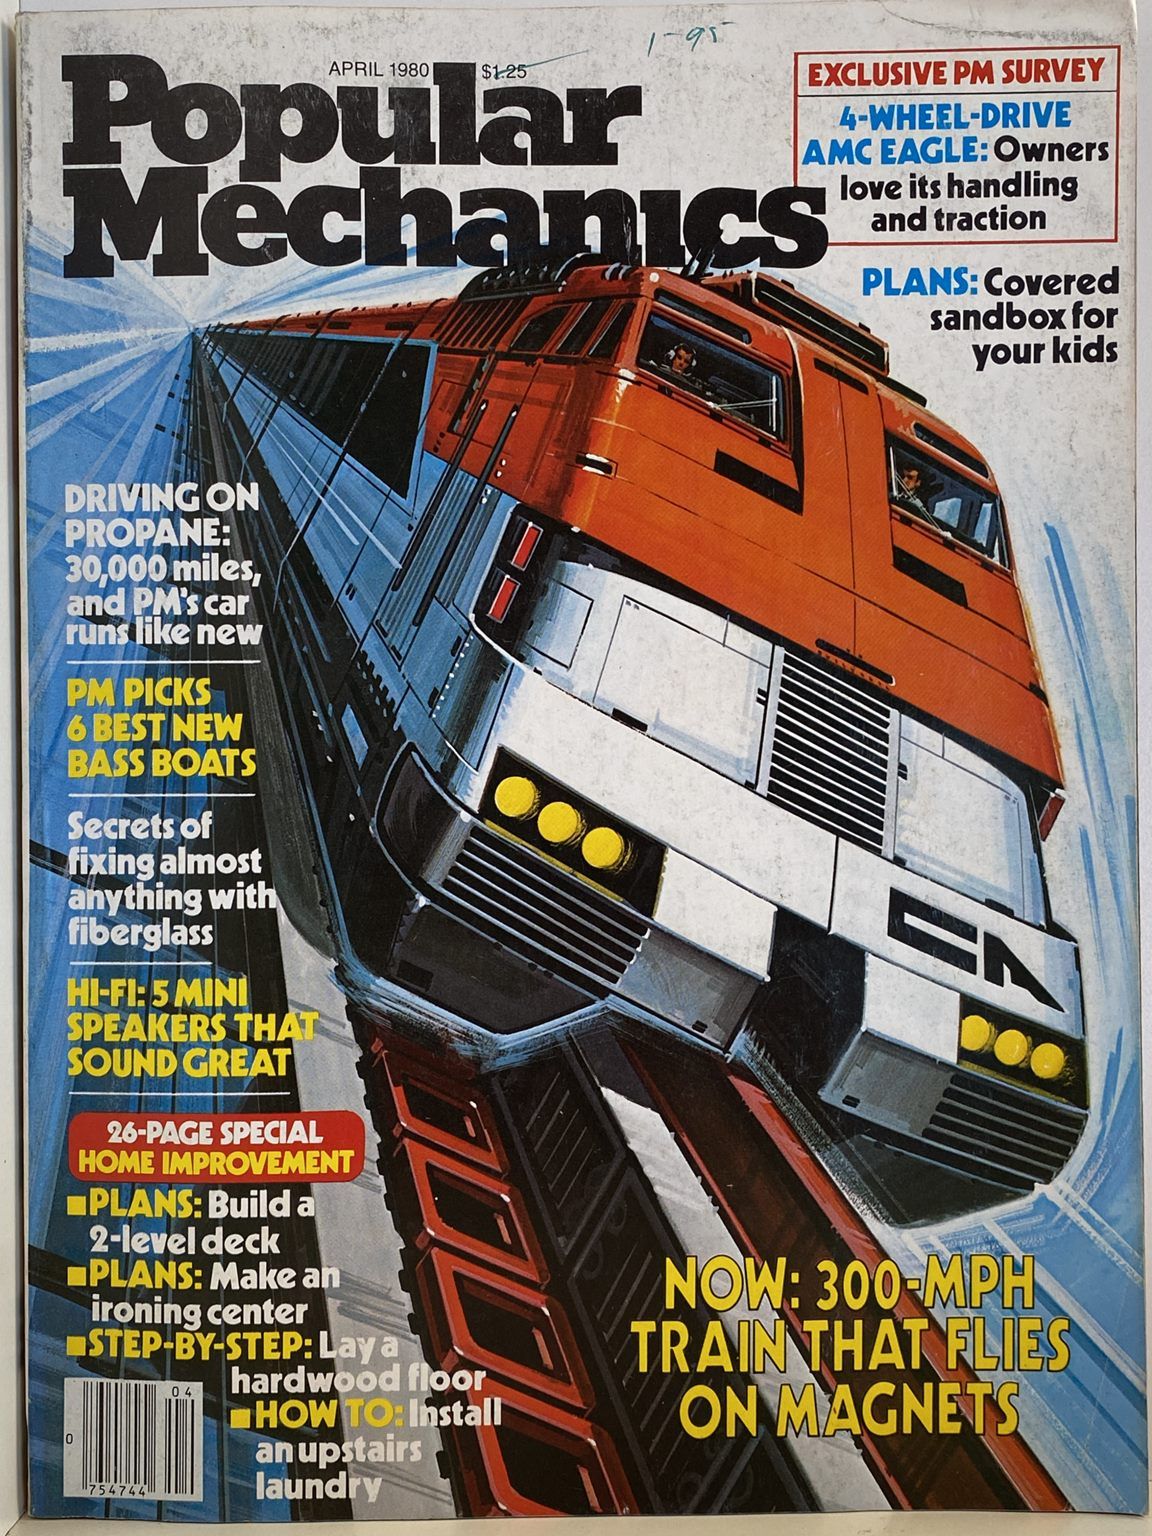 VINTAGE MAGAZINE: Popular Mechanics - Vol. 153, No. 4 - April 1980